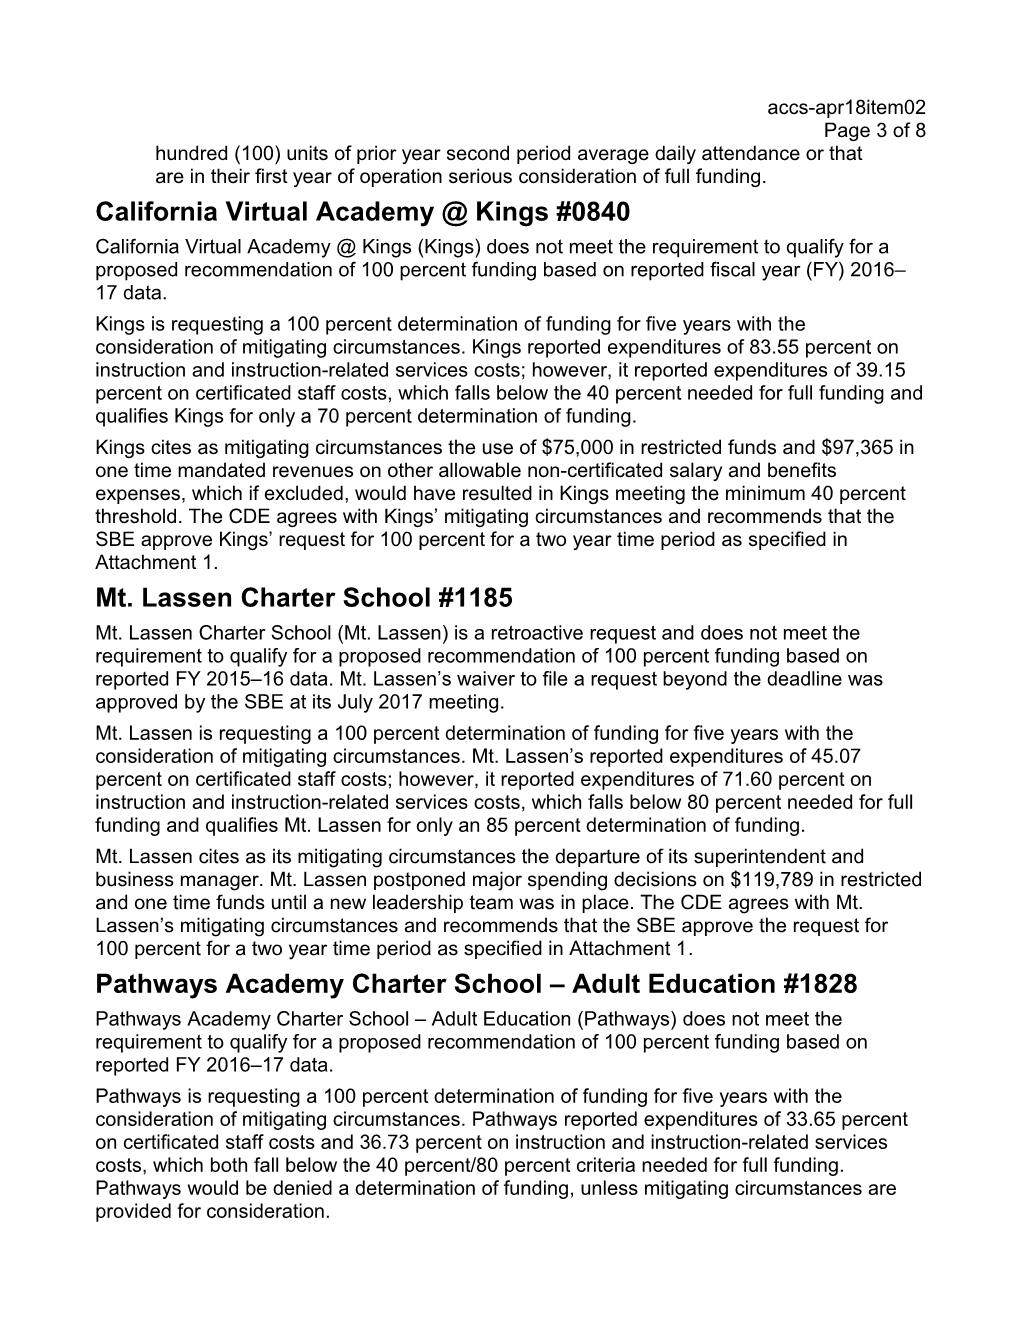 April 2018 ACCS Agenda Item 02 - Advisory Commission on Charter Schools (CA State Board